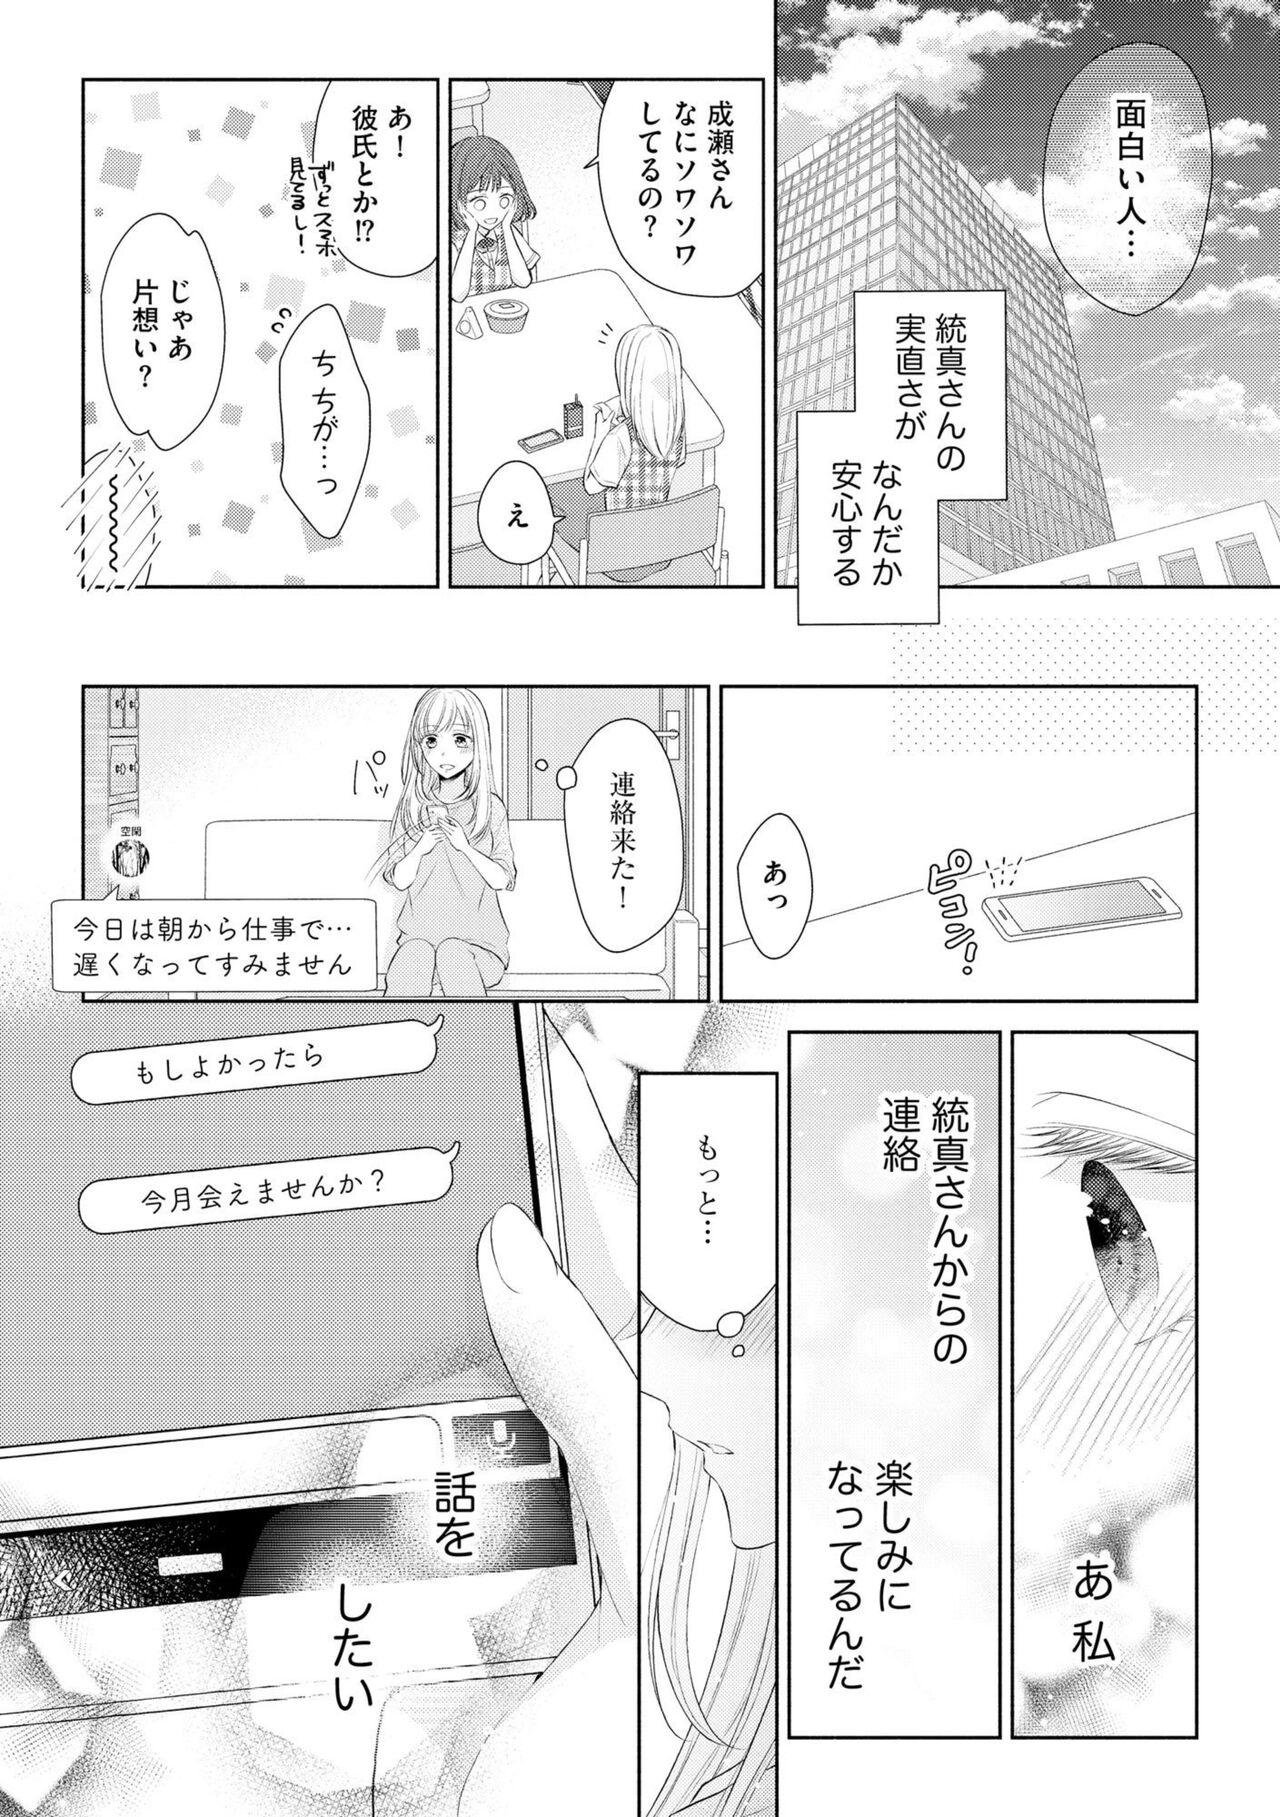 Banho Koibito wa Amakute Junjōna Yakuza-sama itto Ecchi wa oku made Torotoro 1 Perverted - Page 11